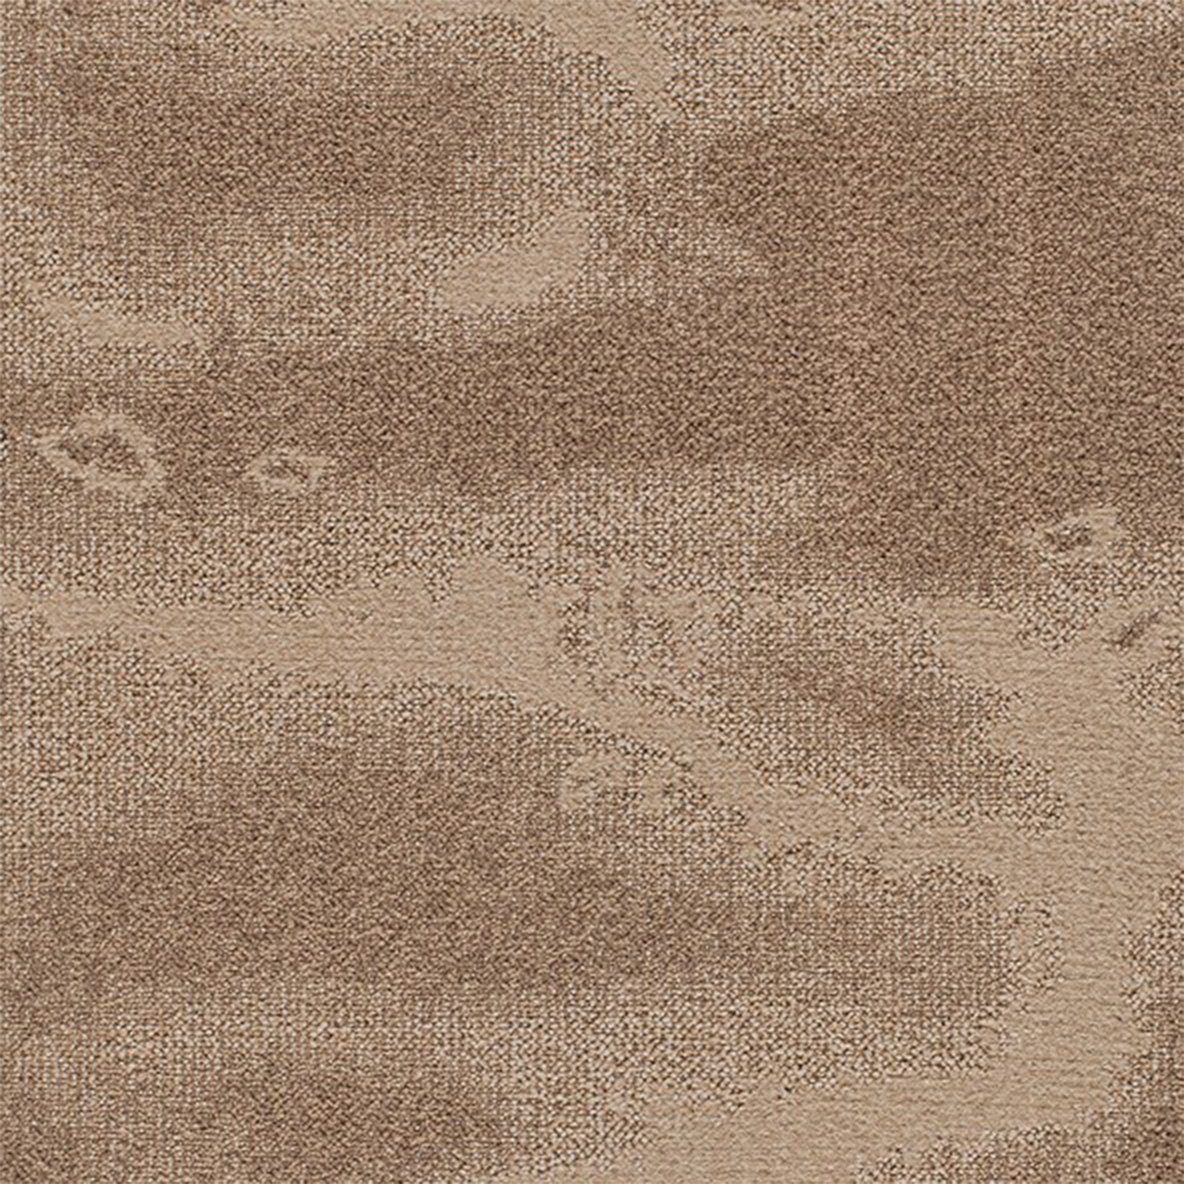 Oil and Water Commercial Carpet Tiles .32 Inch x 50x50 cm per Tile Camel color close up